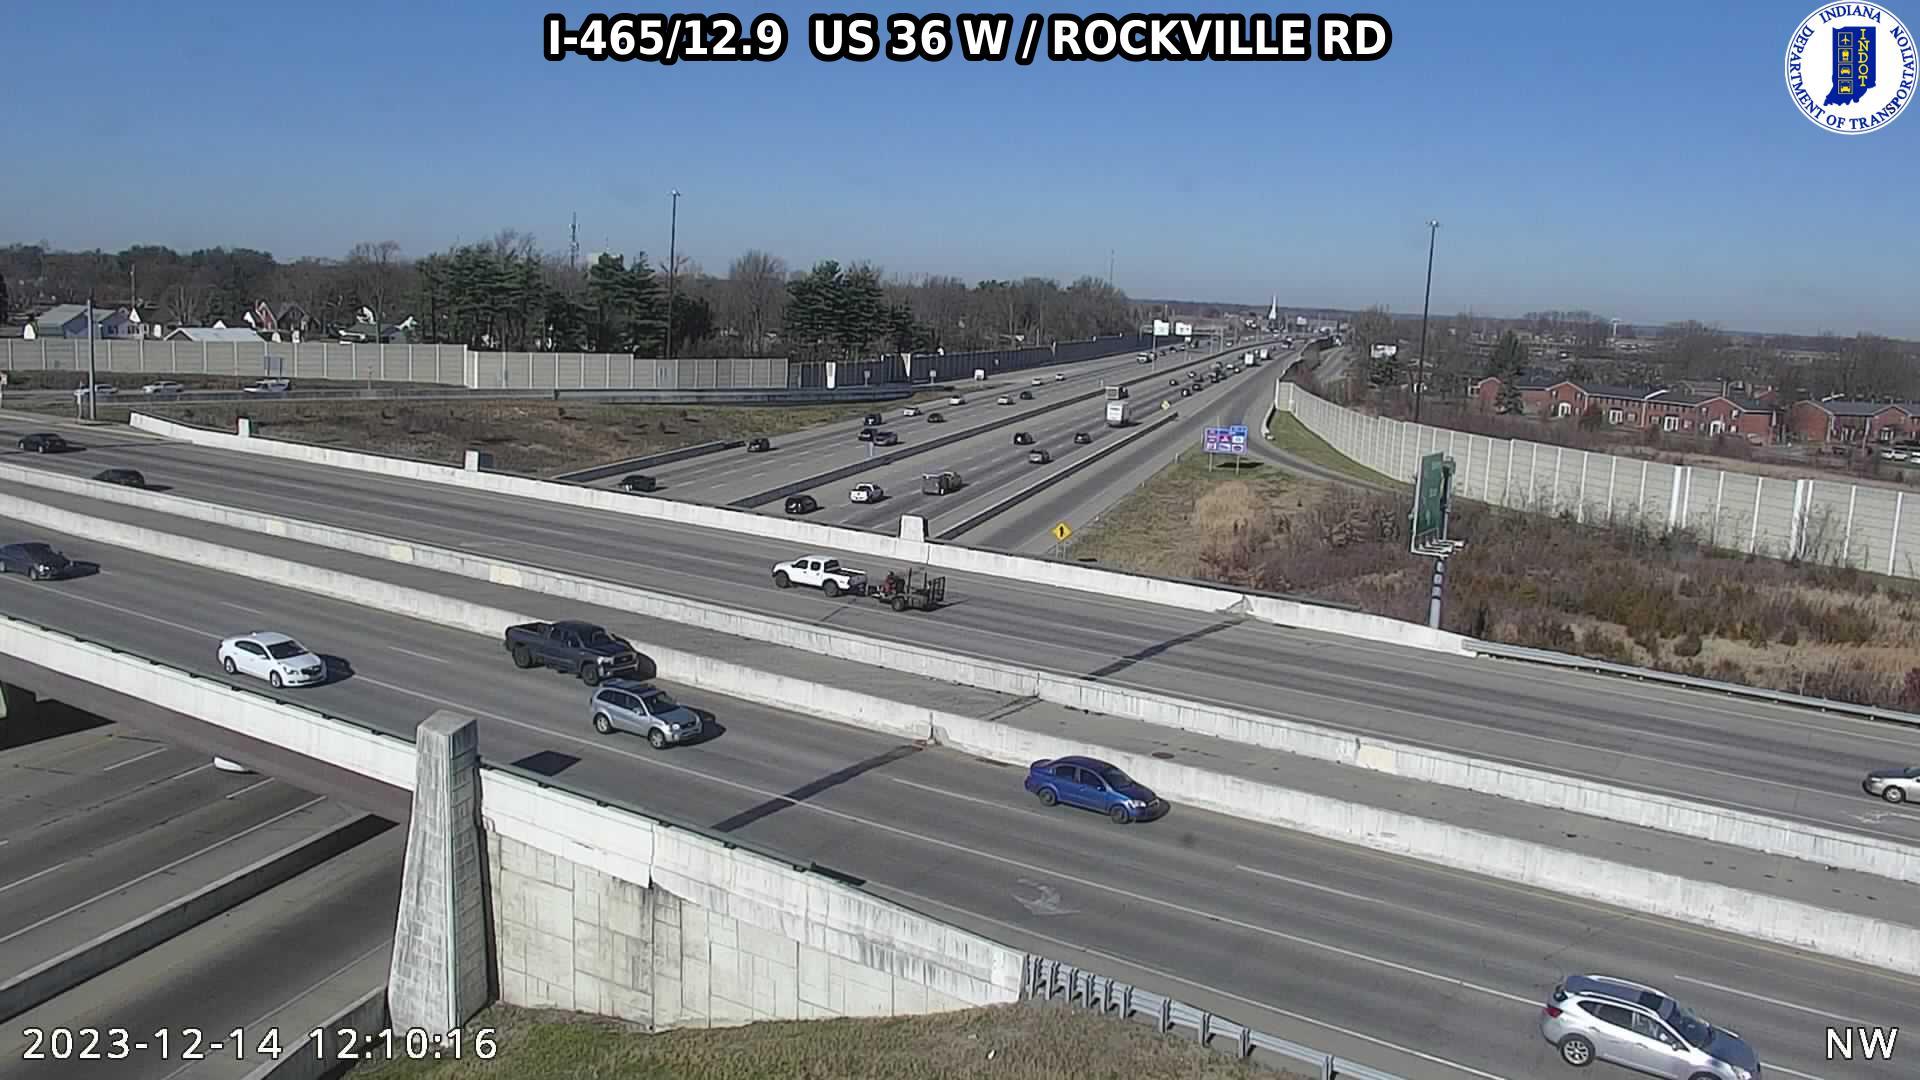 Indianapolis: I-465: I-465/12.9 US 36 W - ROCKVILLE RD Traffic Camera